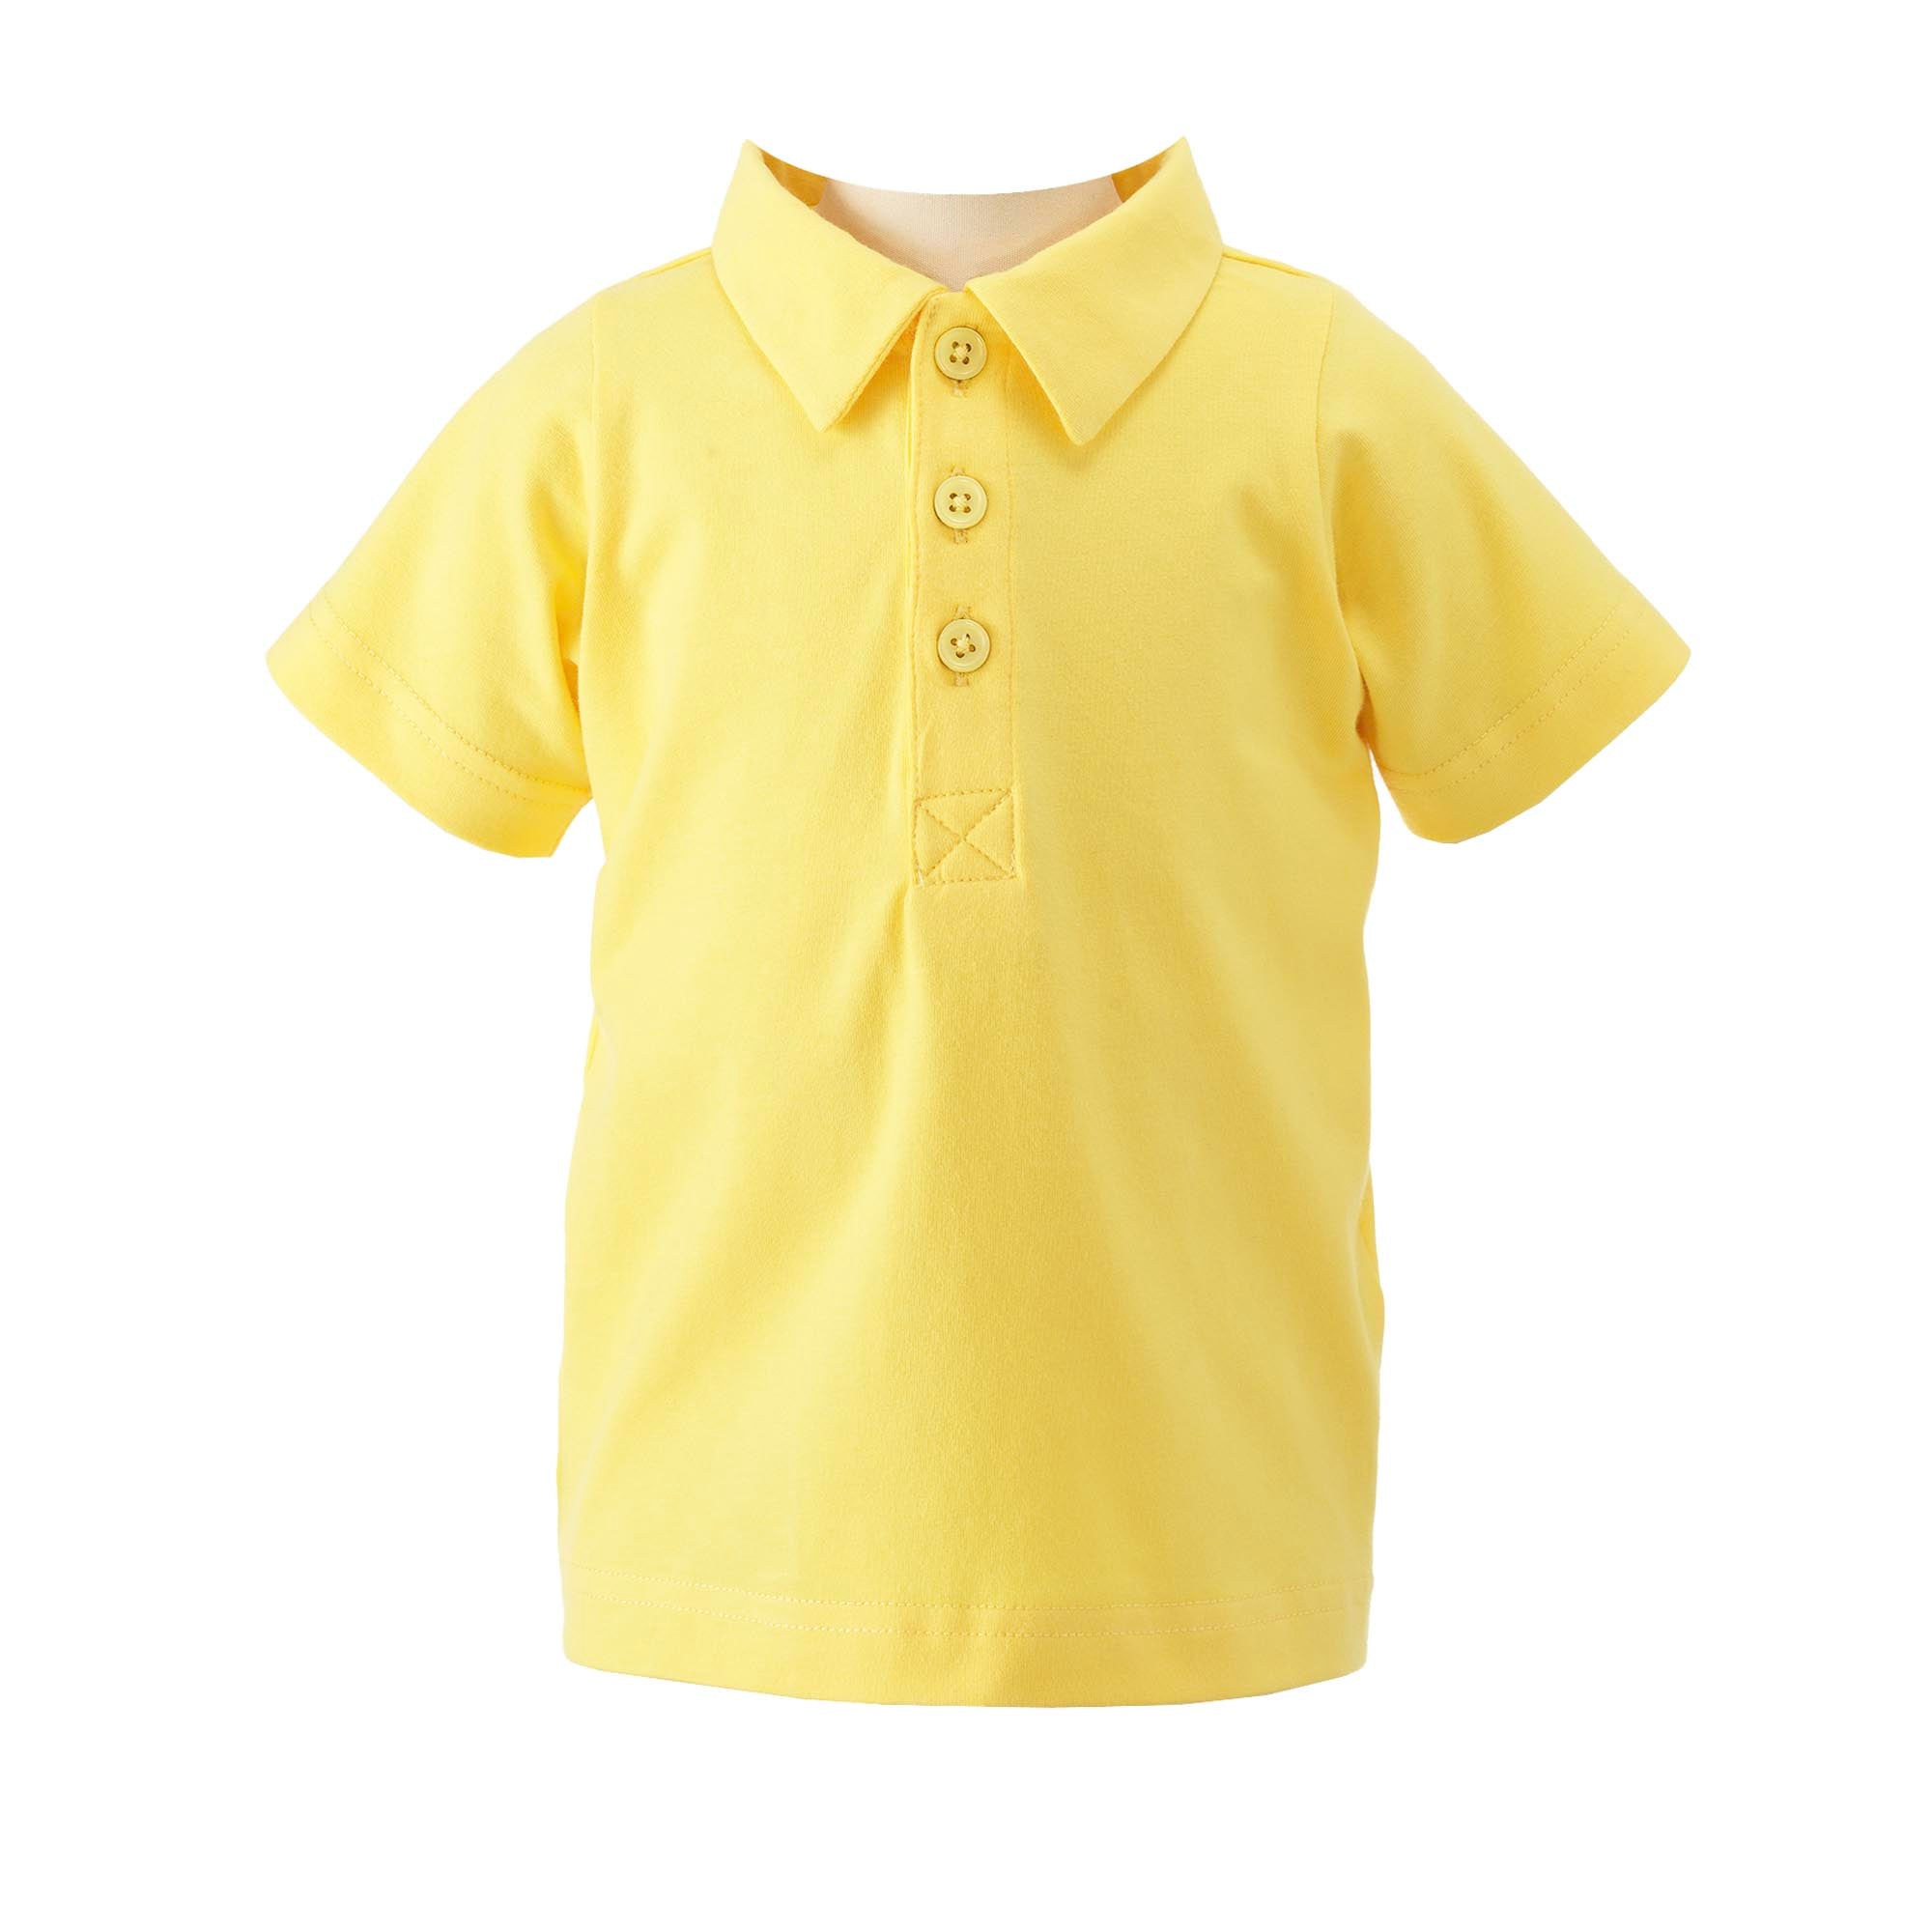 Yellow and Blue Collar Kids School Uniform